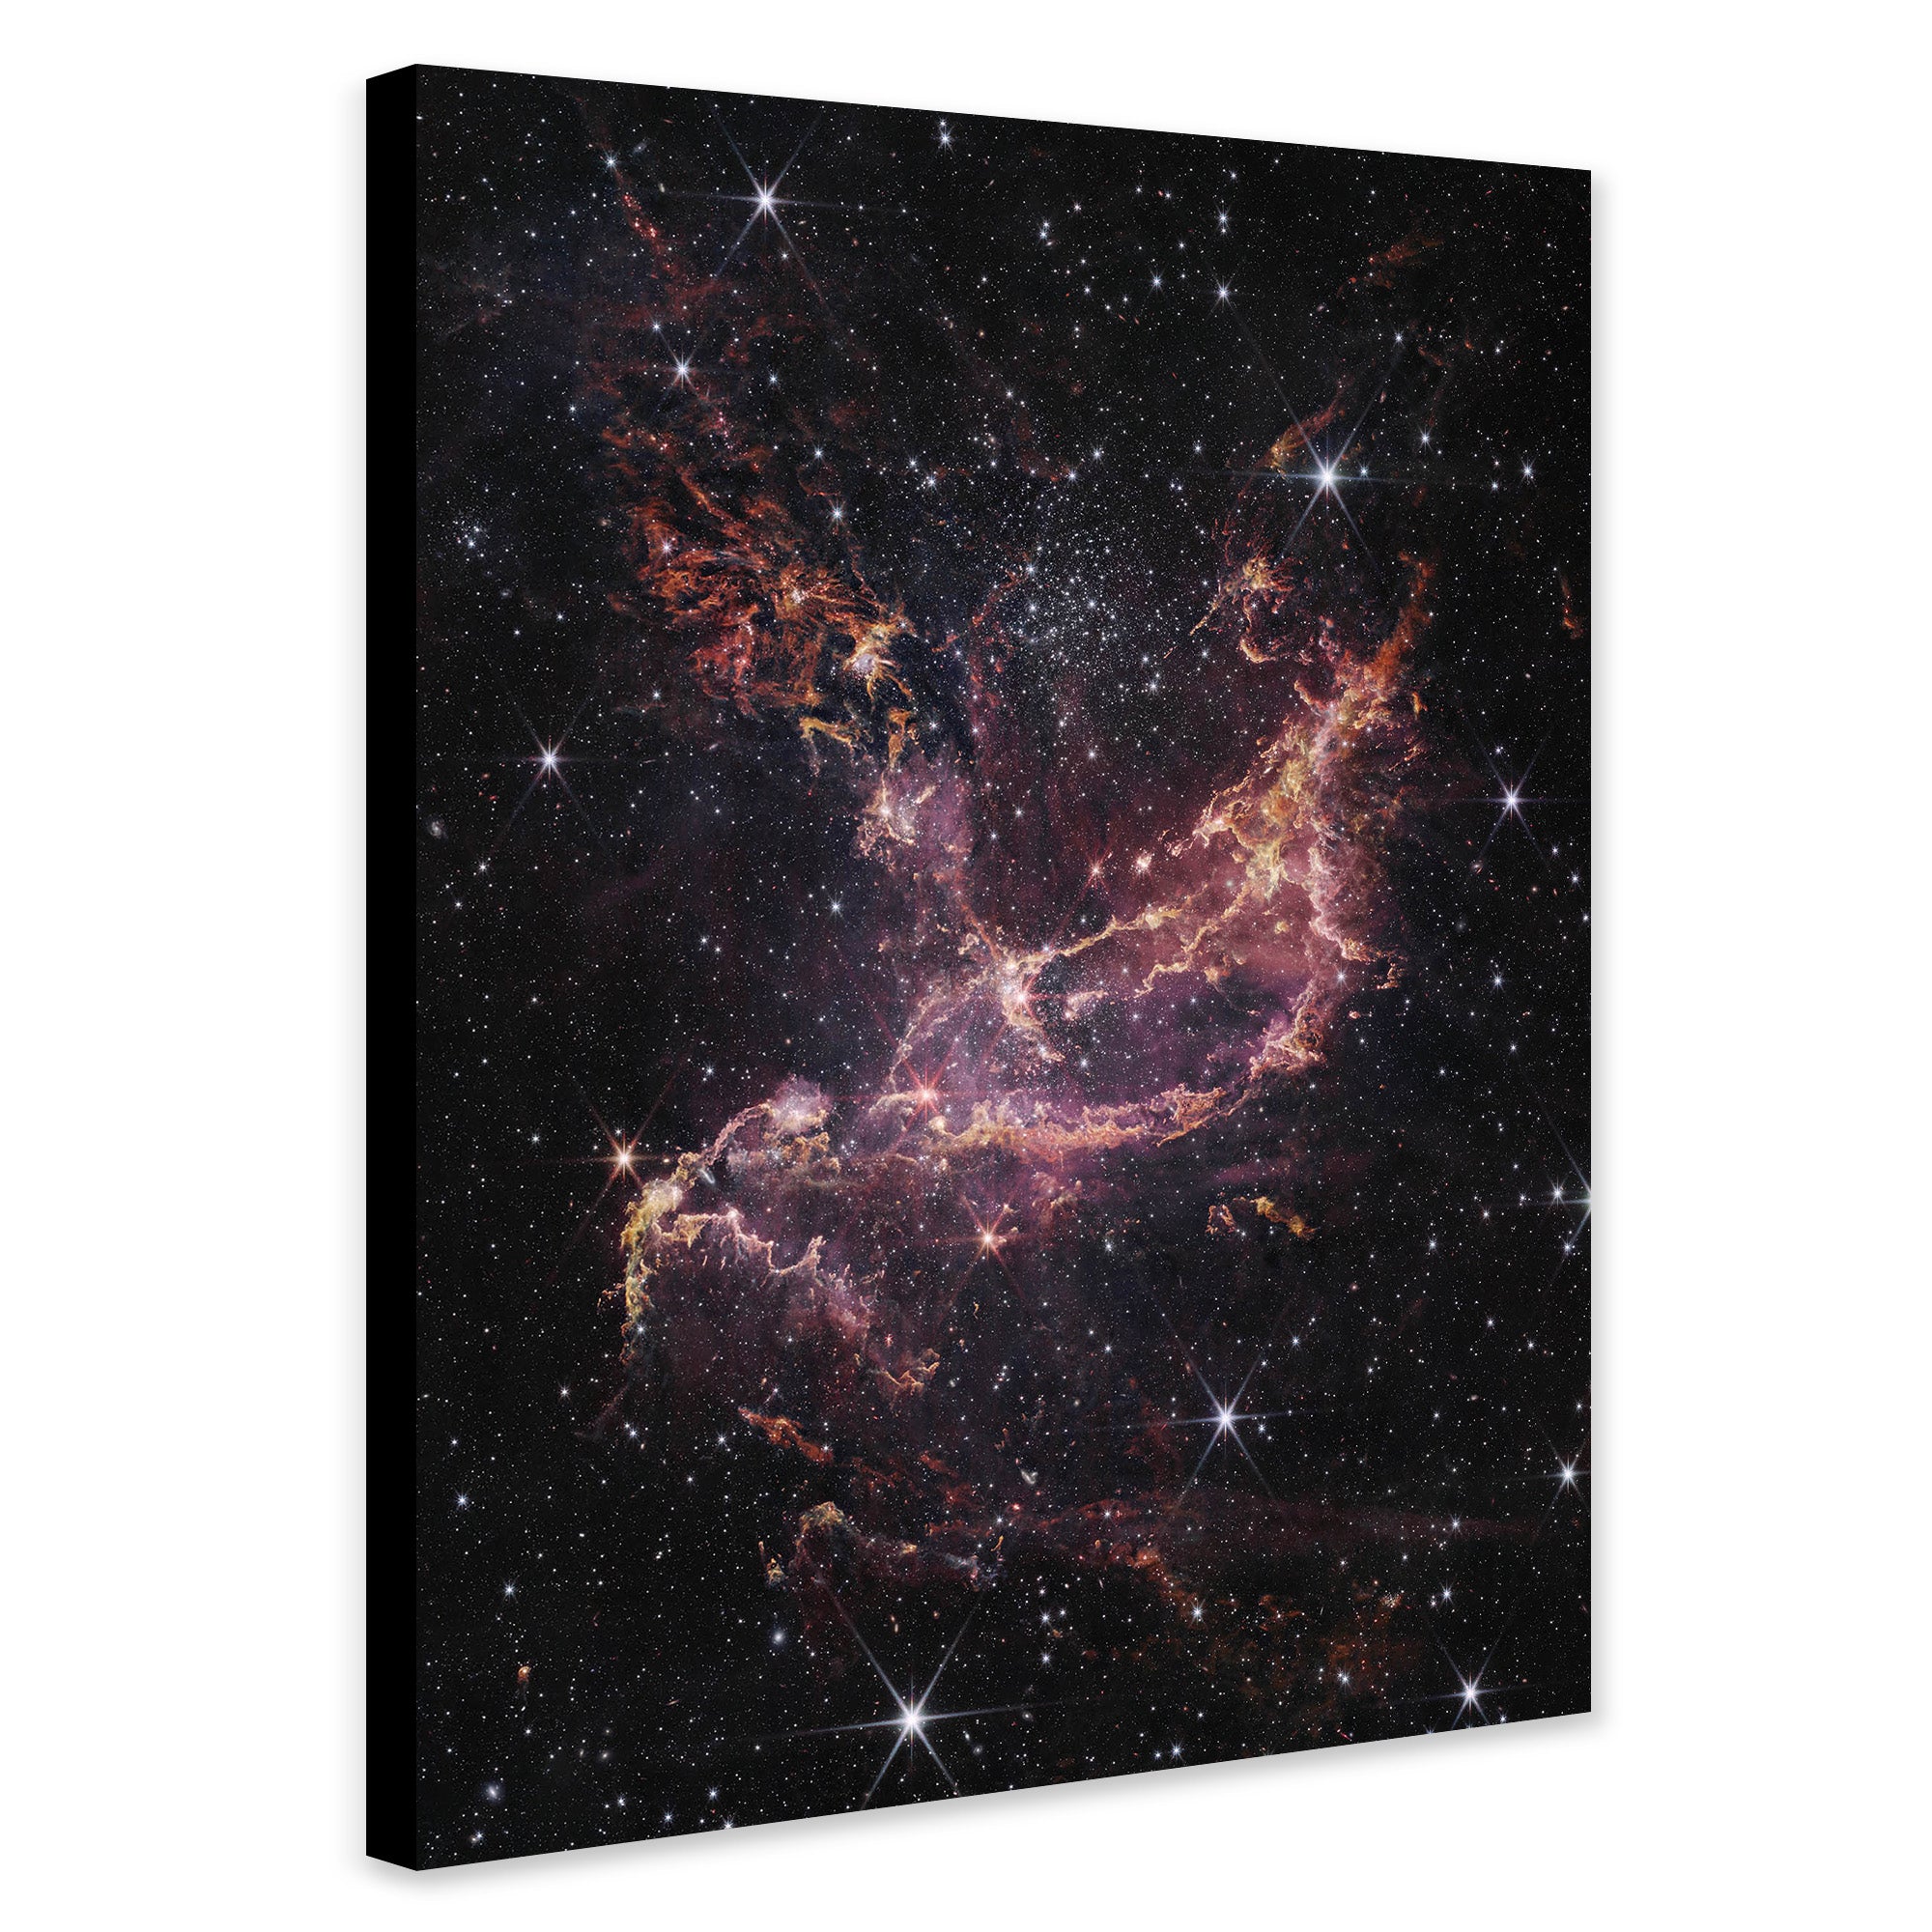 Small Magellanic Cloud From NASA'S James Webb Space Telescope - Wall Art - Canvas Wall Art Framed Print - Various Sizes